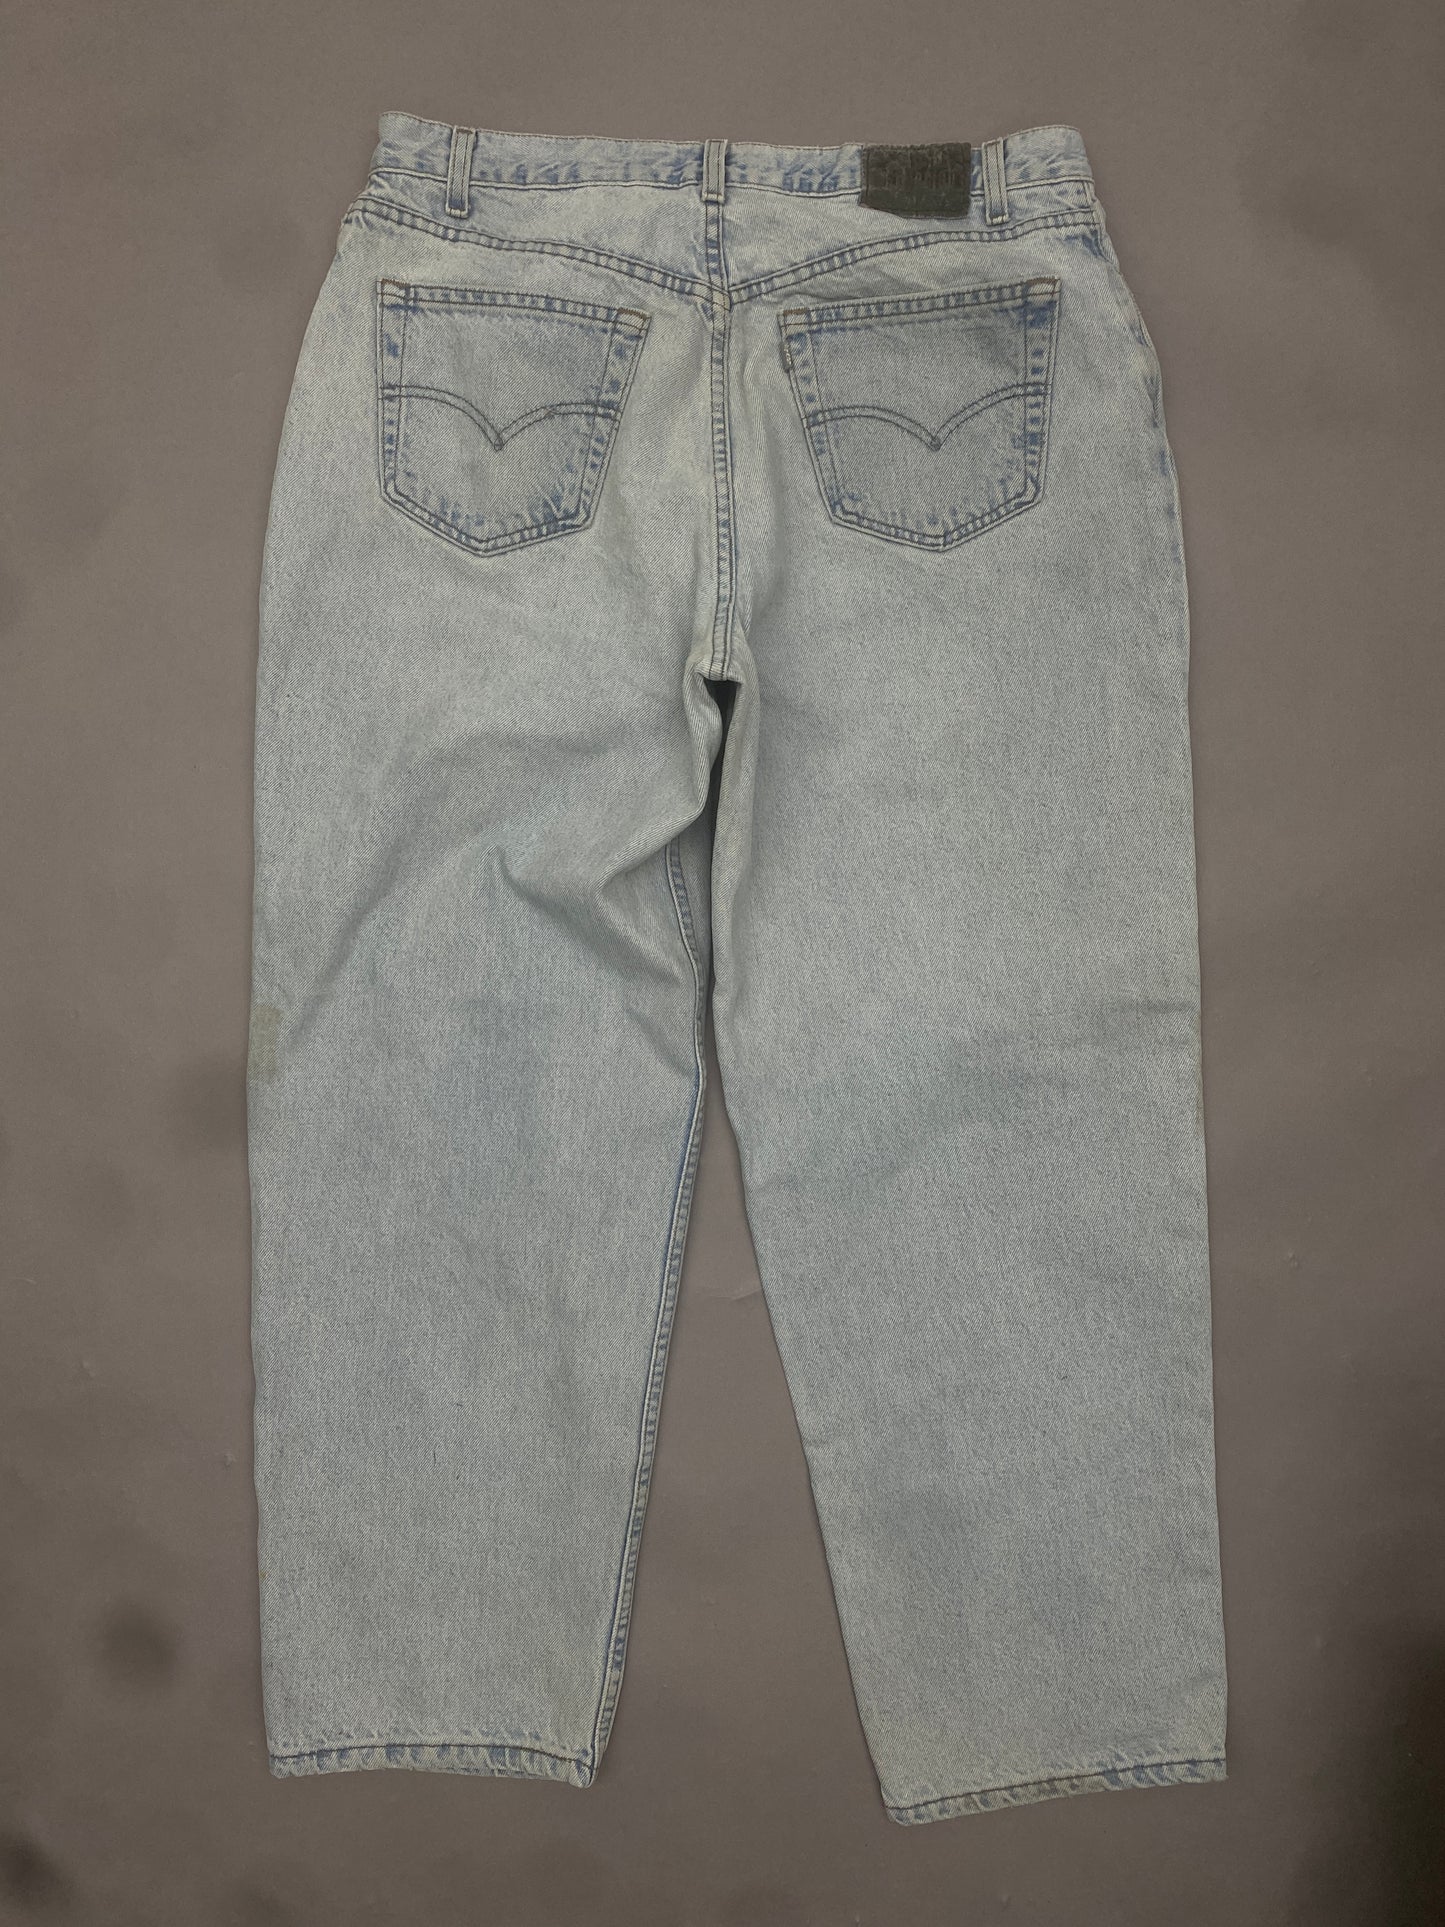 Levis Silvertab Loose Vintage Jeans - 36